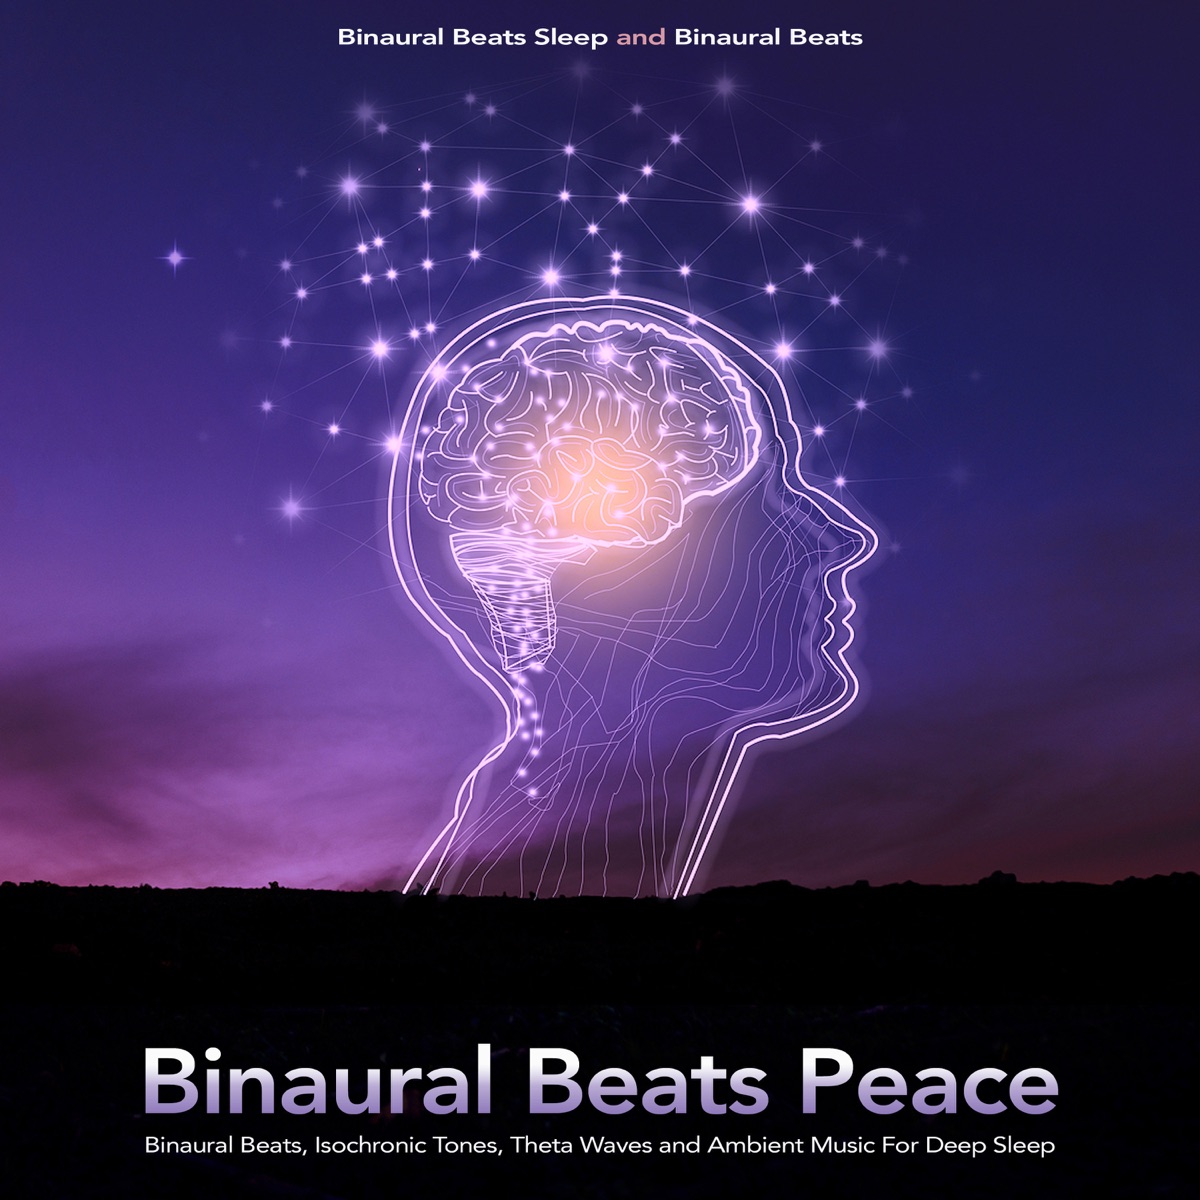 Binaural Beats Peace: Binaural Beats, Isochronic Tones, Theta Waves and  Ambient Music For Deep Sleep by Binaural Beats Sleep & Binaural Beats on  Apple Music